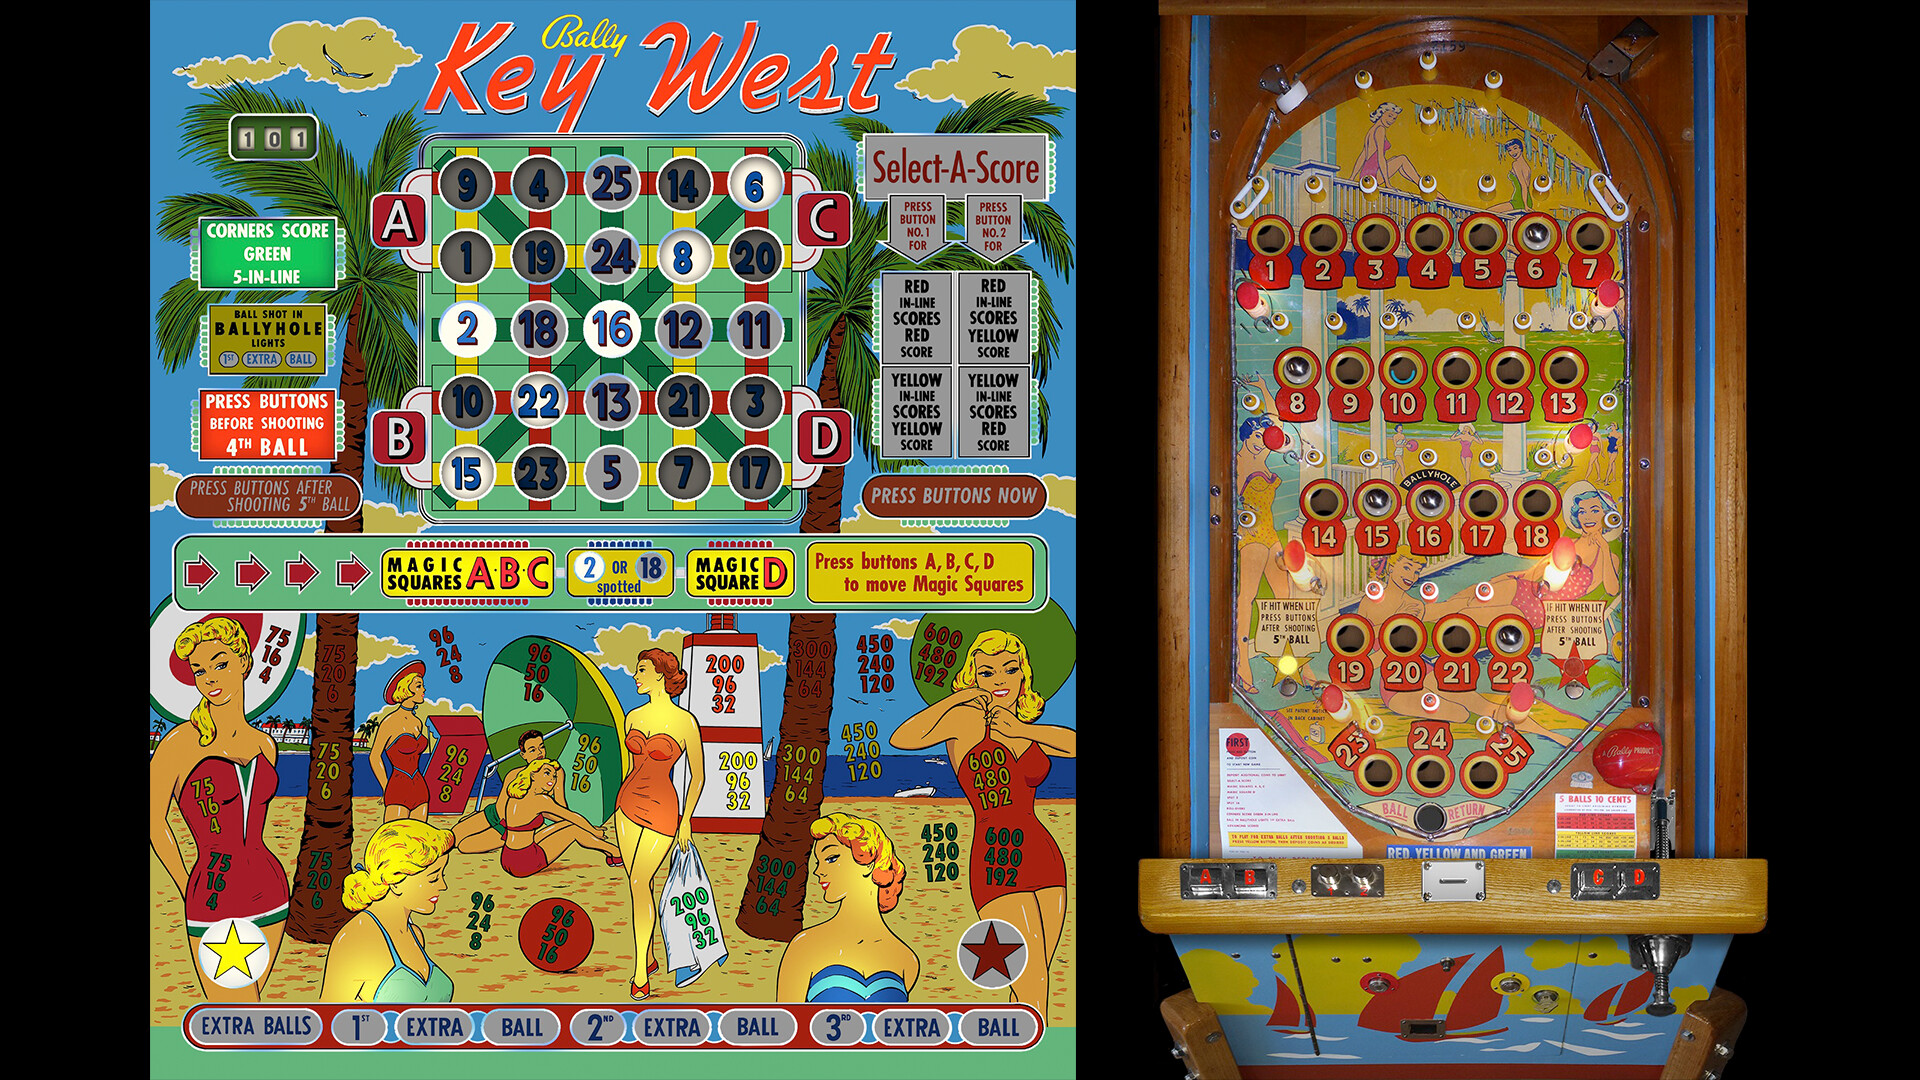 Bingo Pinball Gameroom - Bally Key West Featured Screenshot #1